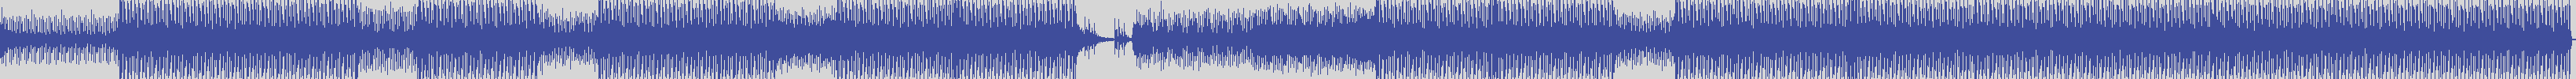 atomic_recordings [AR013] Paul Cutiè - Pumping [Original Mix] audio wave form